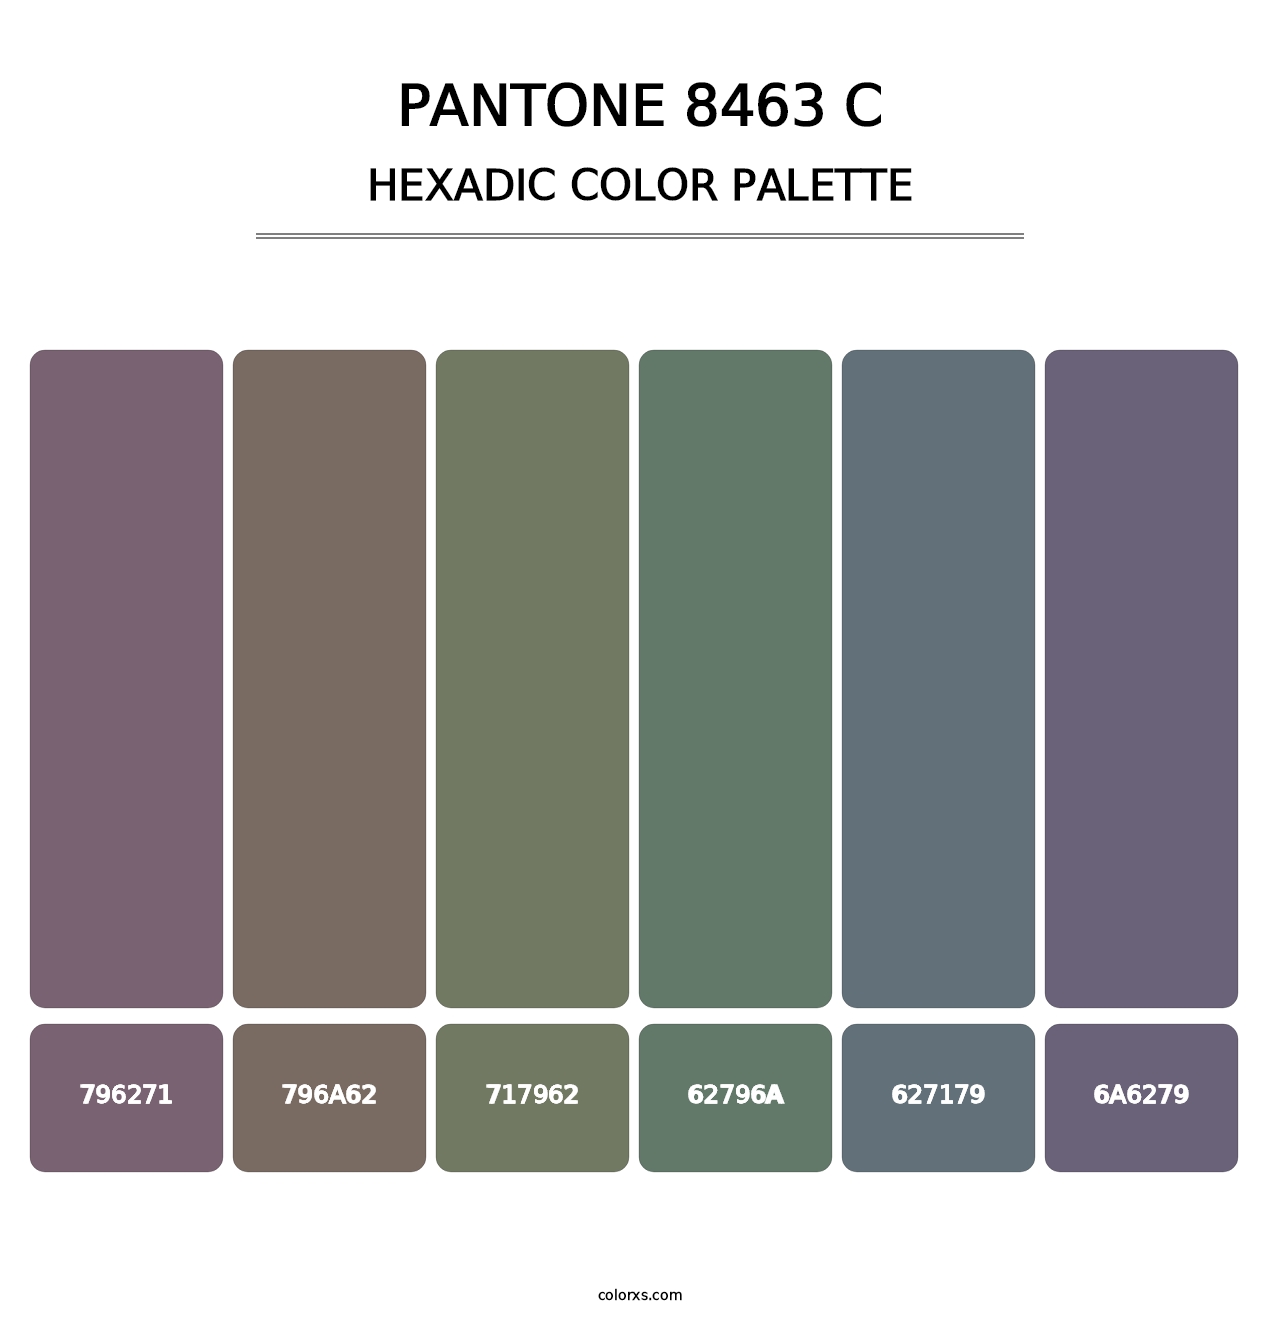 PANTONE 8463 C - Hexadic Color Palette